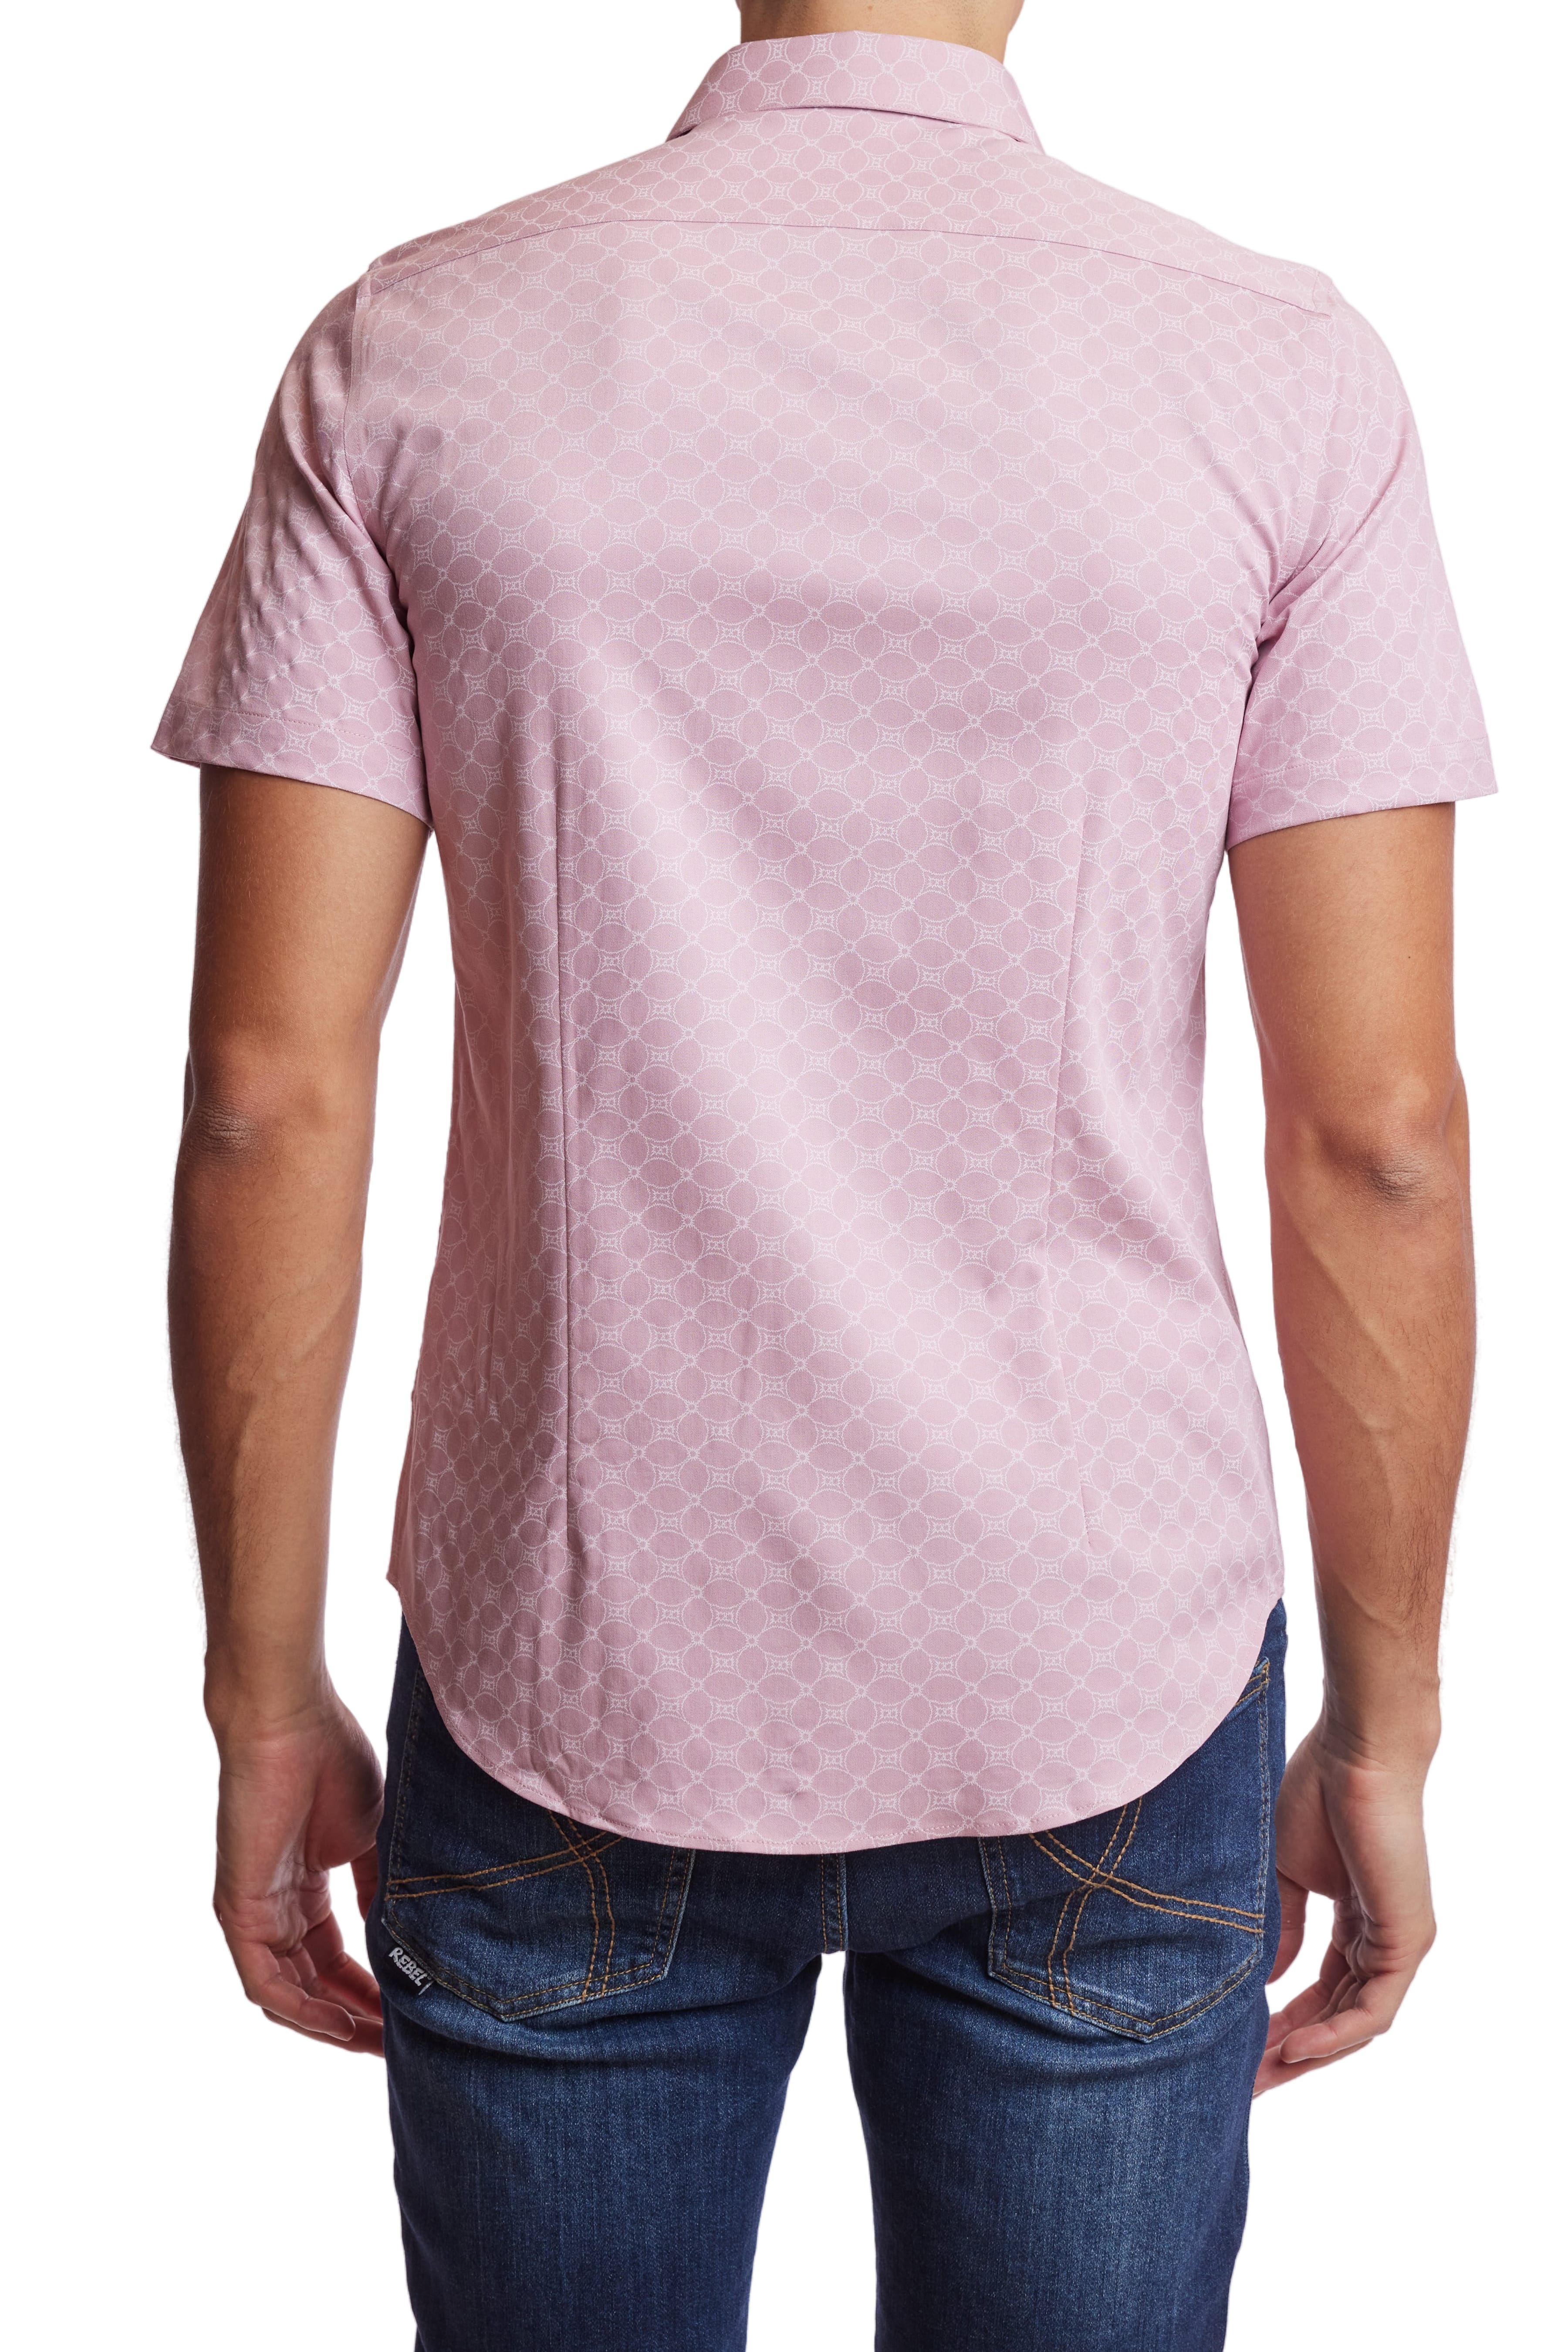 Sawyer S/S Shirt - Pink White